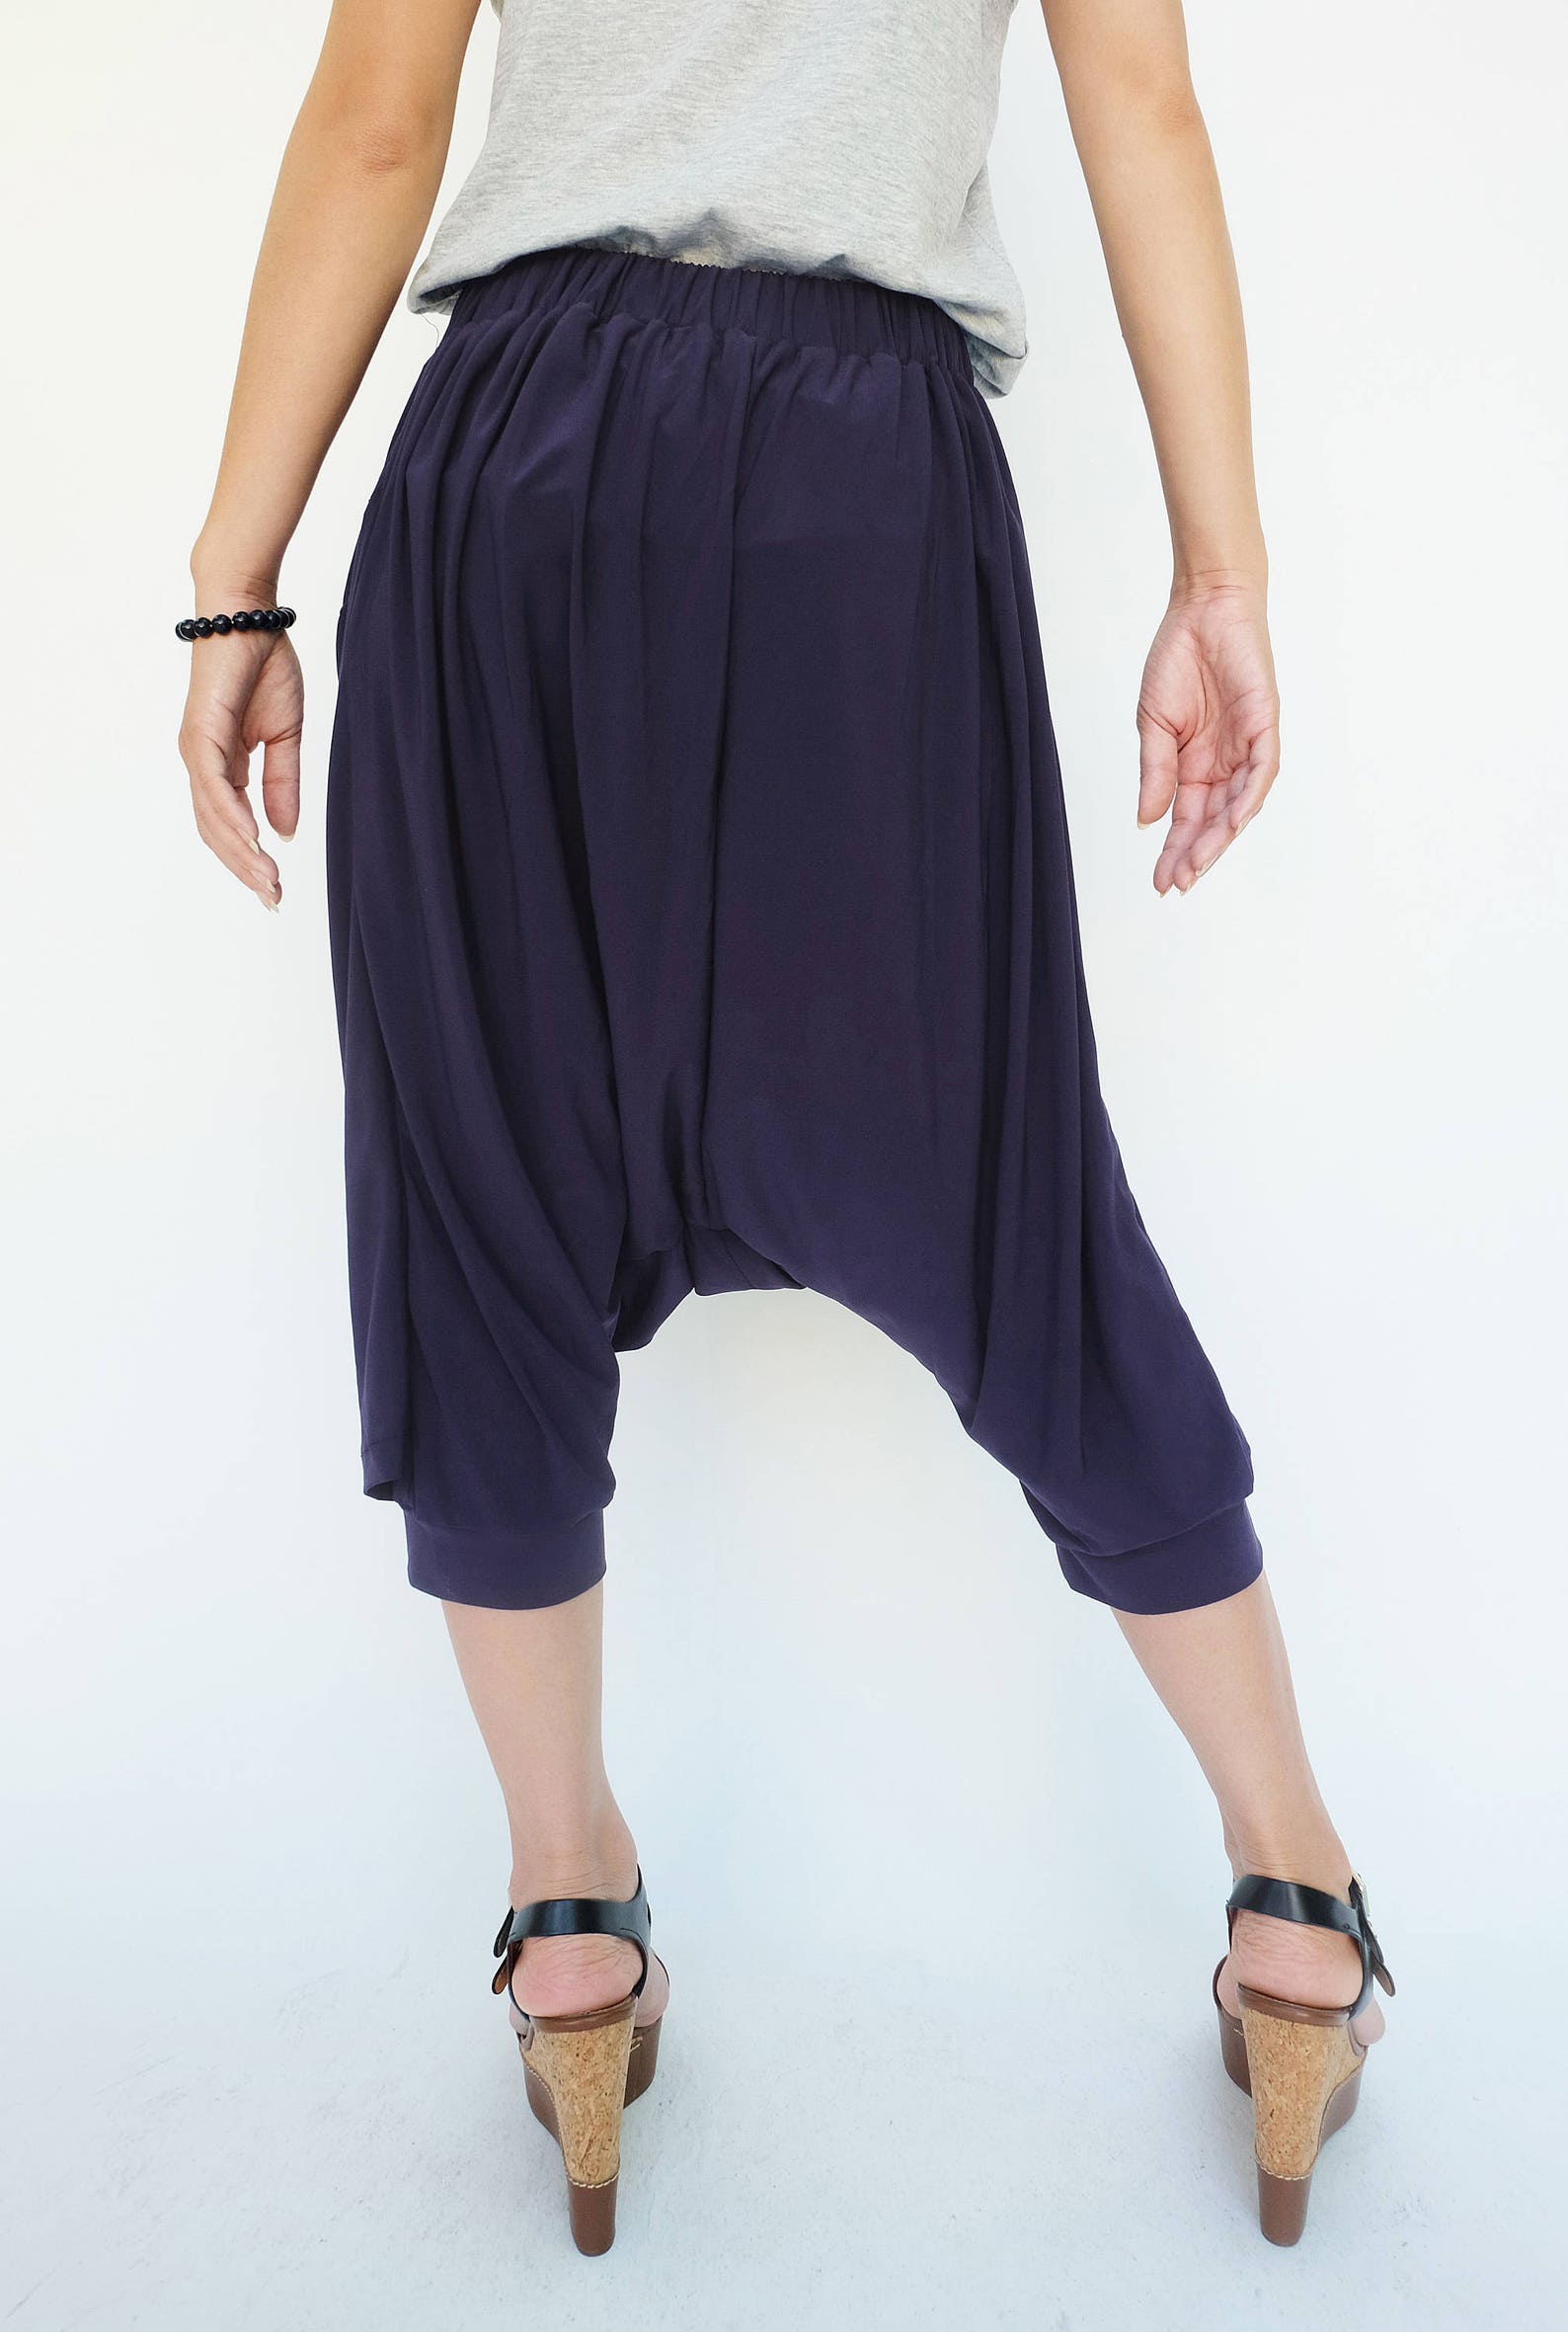 NO.142 Women's Pleated Front Drop Crotch Harem Pants Blue | Etsy